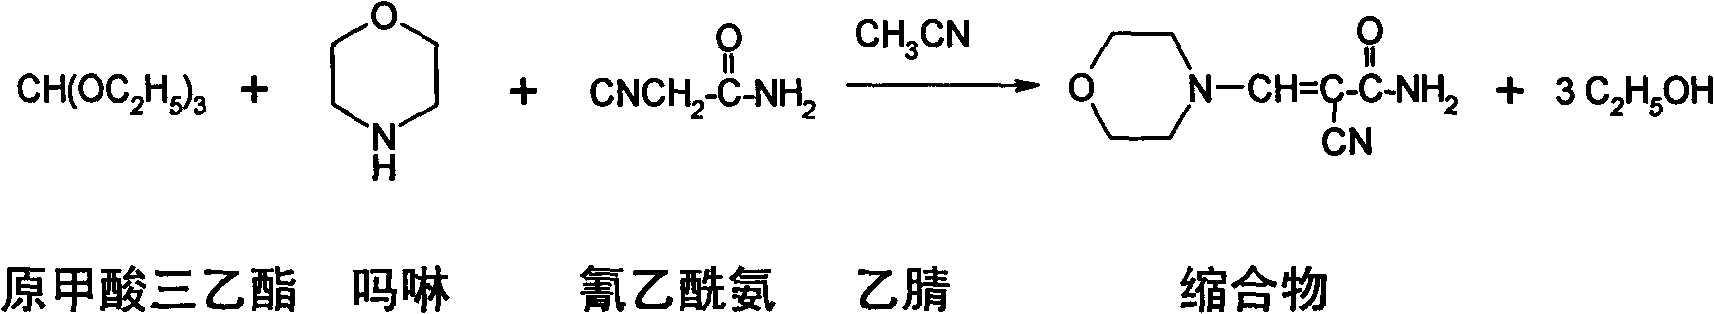 Synthesis method of allopurinol